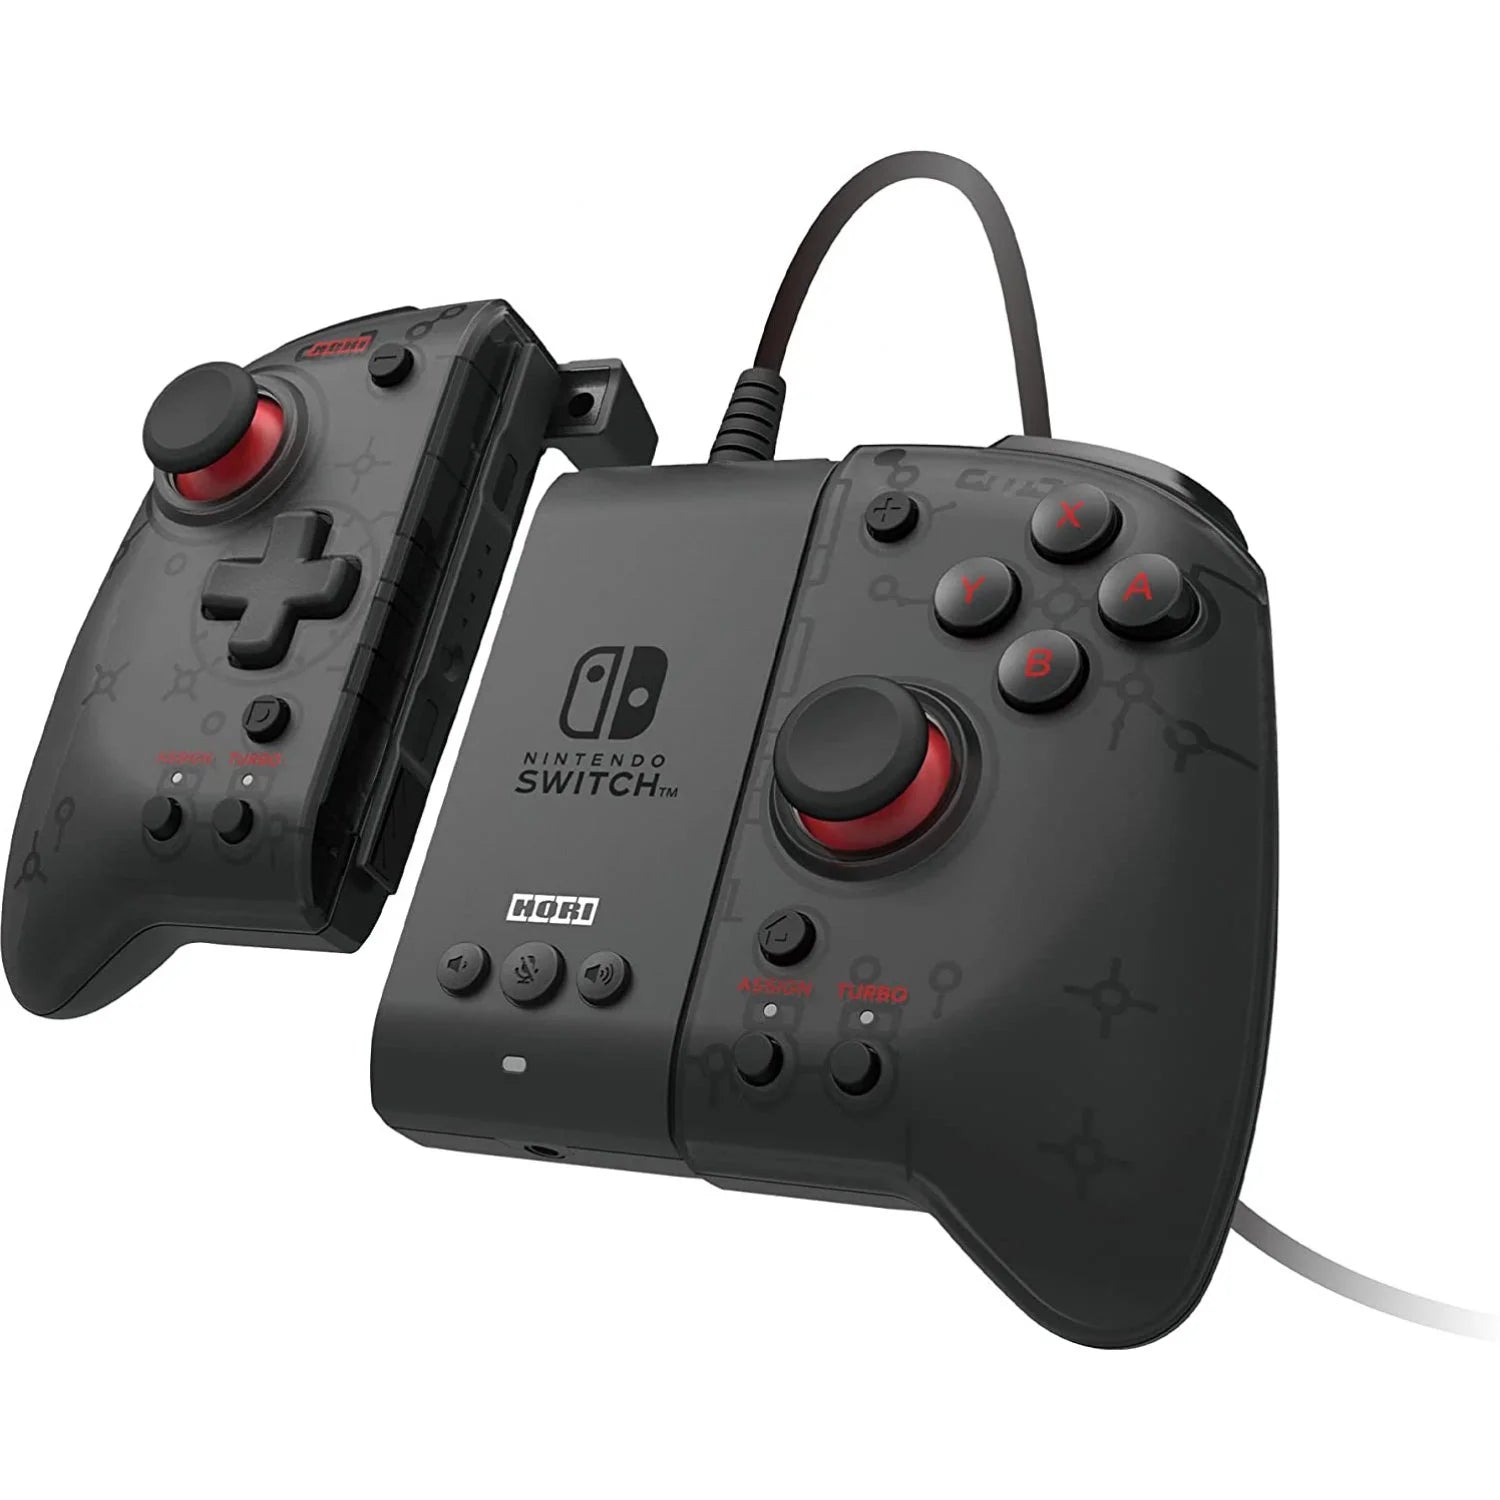 HORI Split Pad Pro Review: A portable Nintendo Pro Controller - 9to5Toys